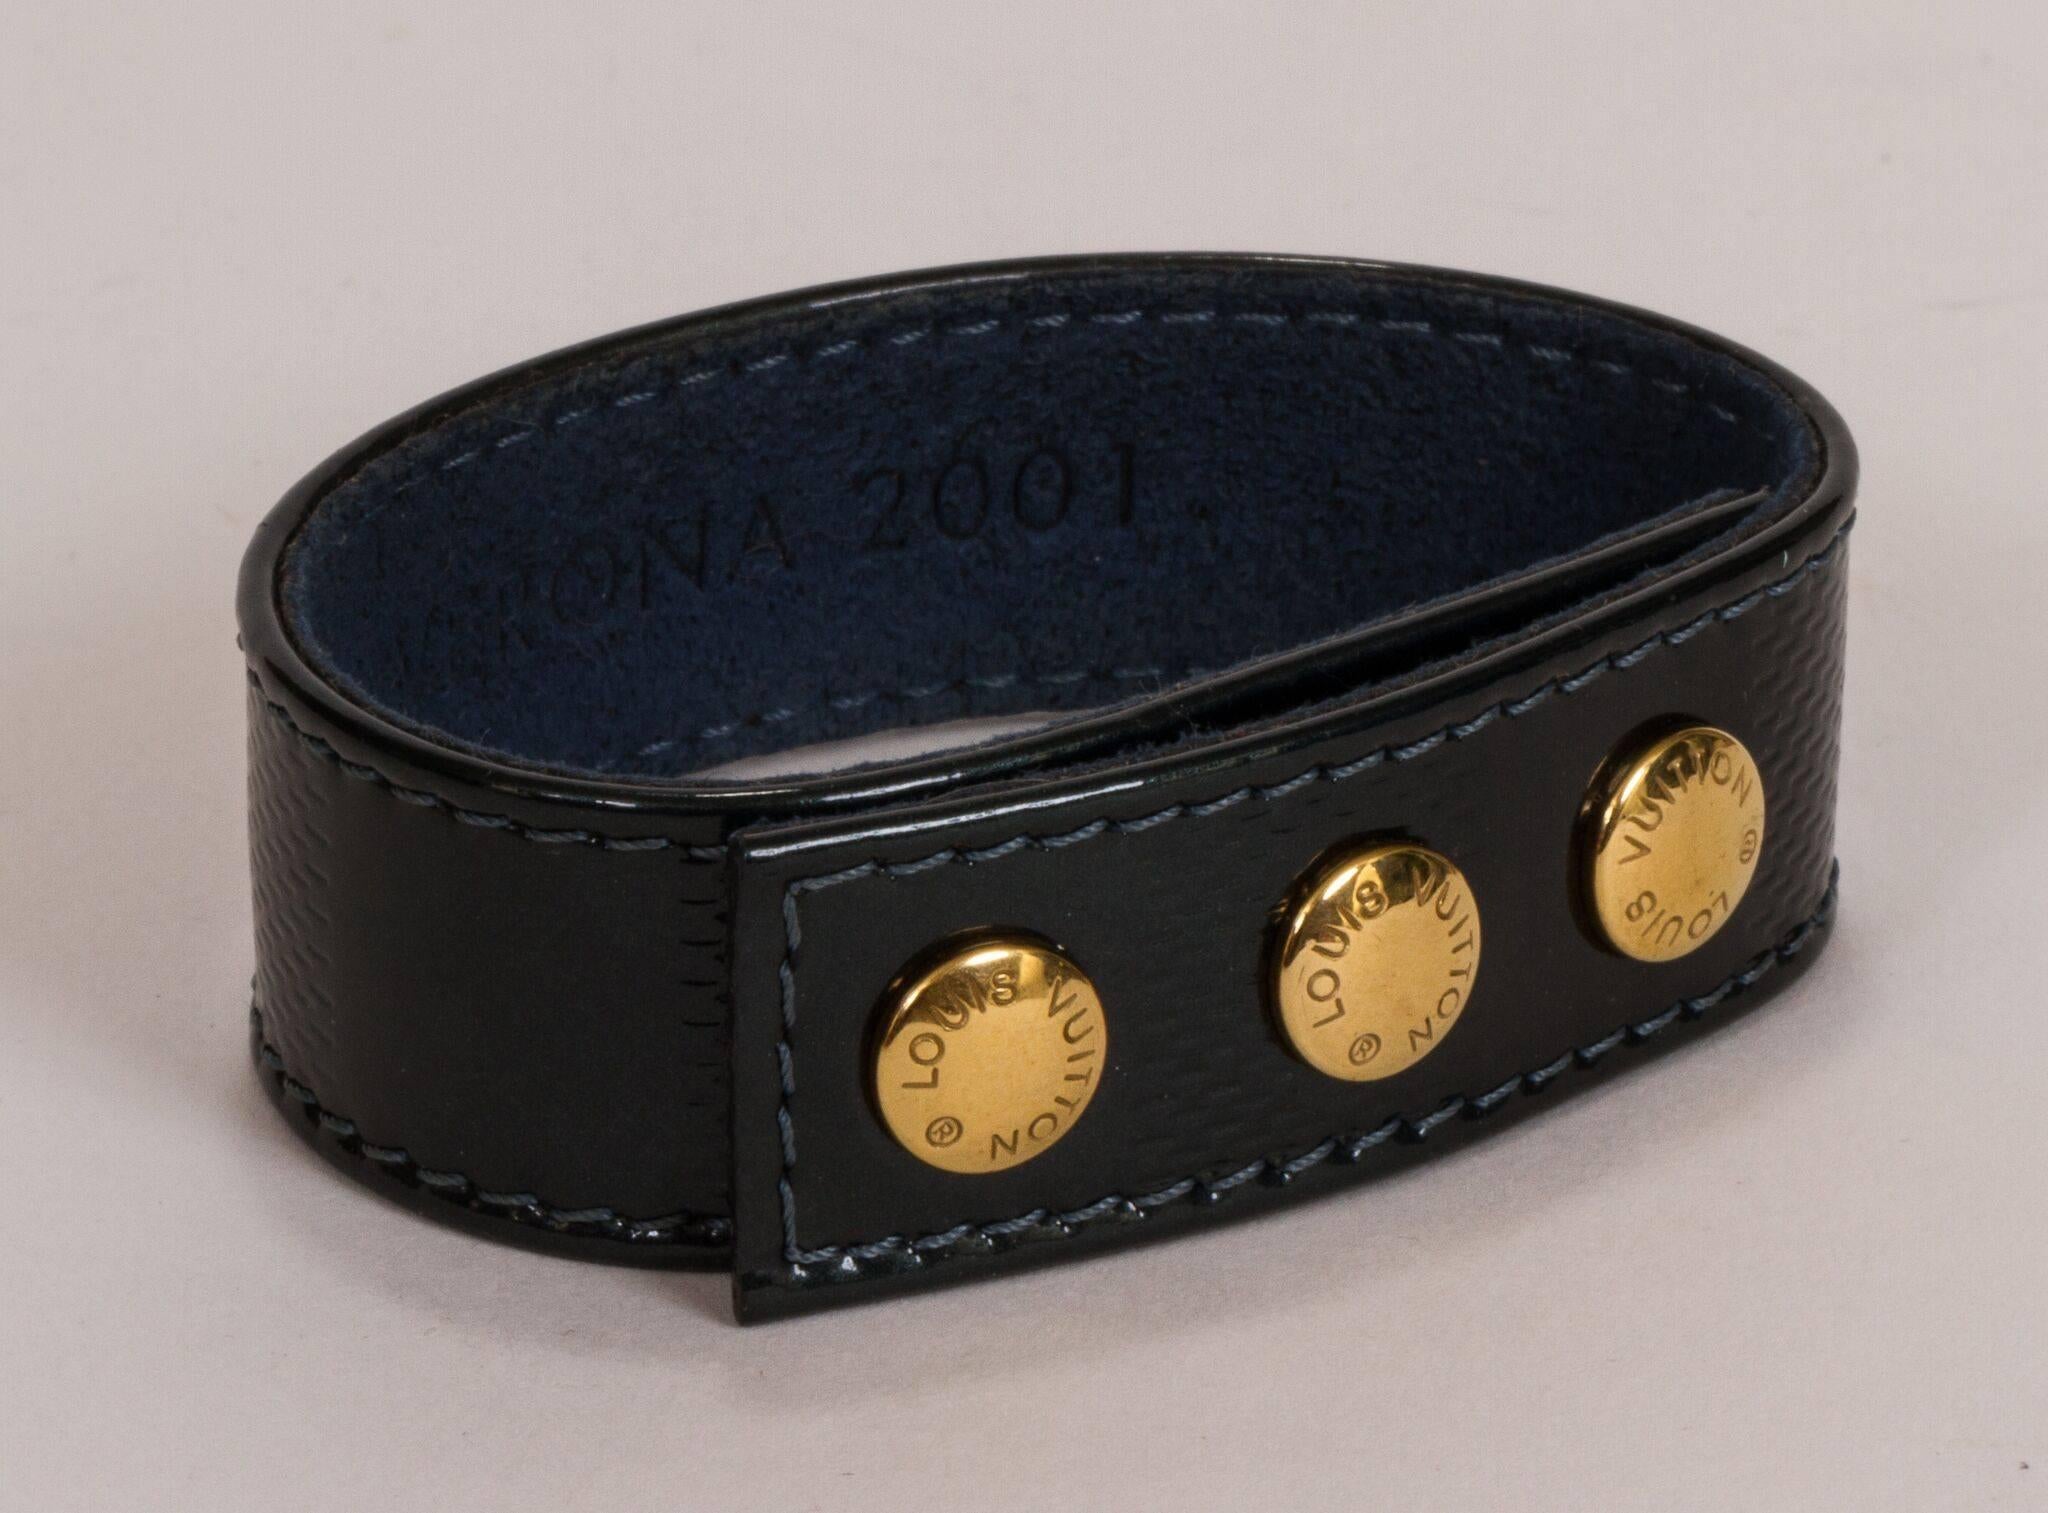 Louis Vuitton limited edition vernis bracelet in navy blue. 2001 Verona. Excellent condition. Comes with velvet pouch